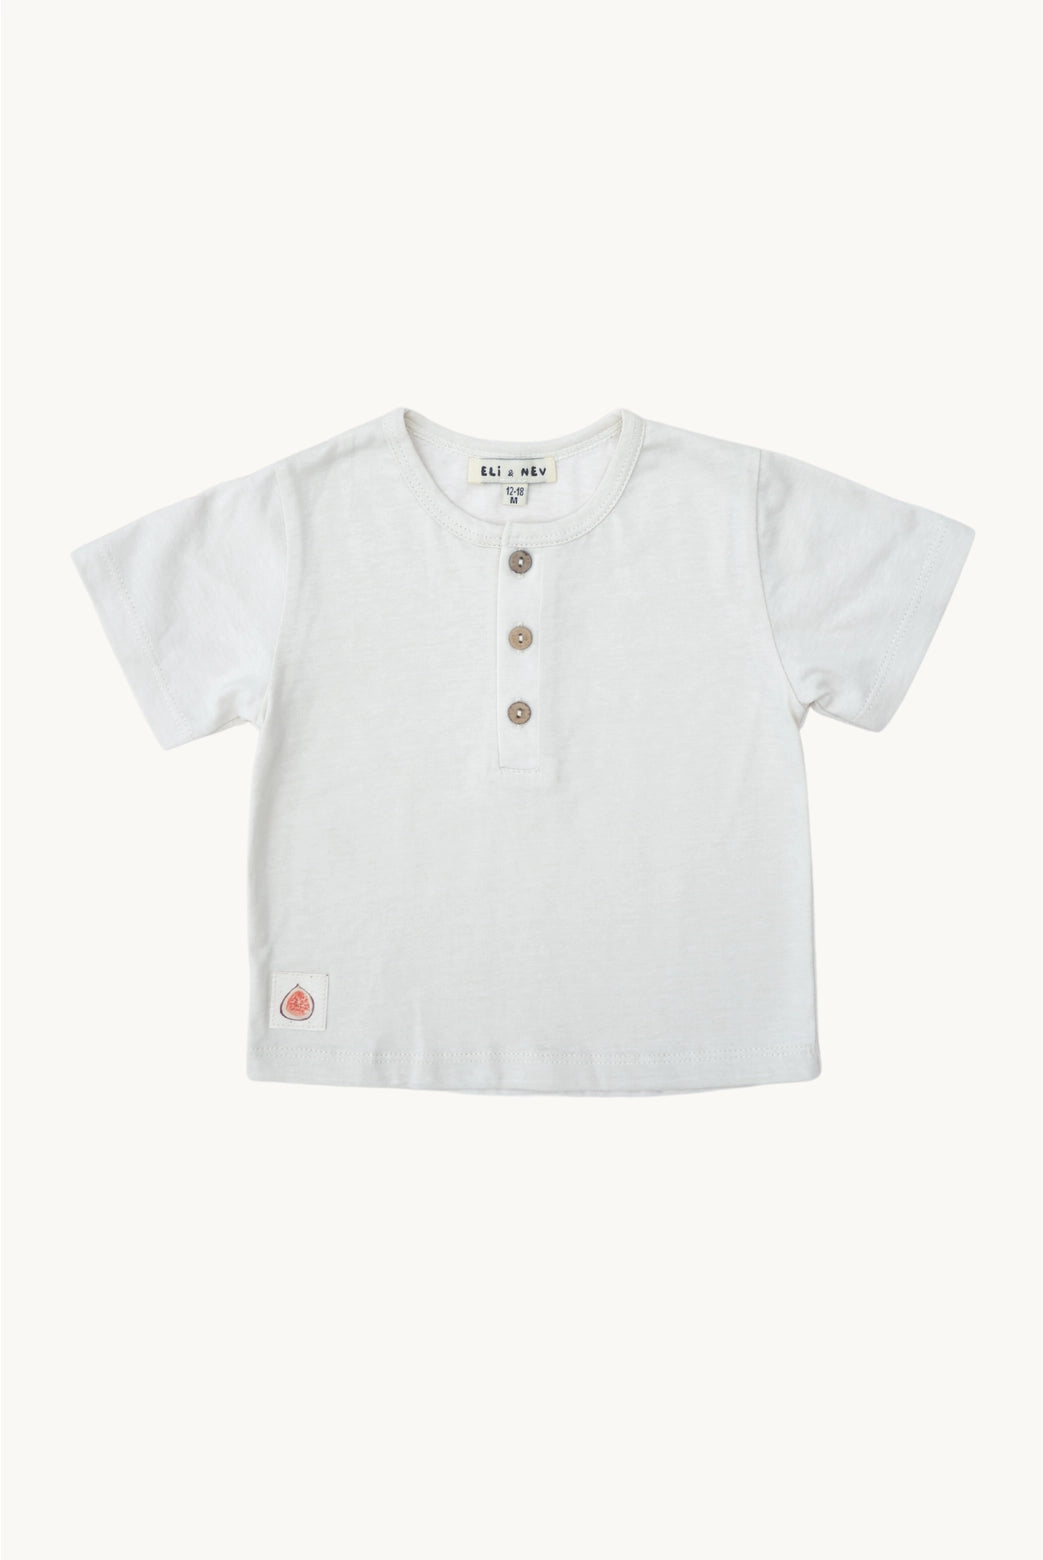 cream short sleeve shirt Eli & Nev Baby/Kid's T-Shirt - Merin/Fig